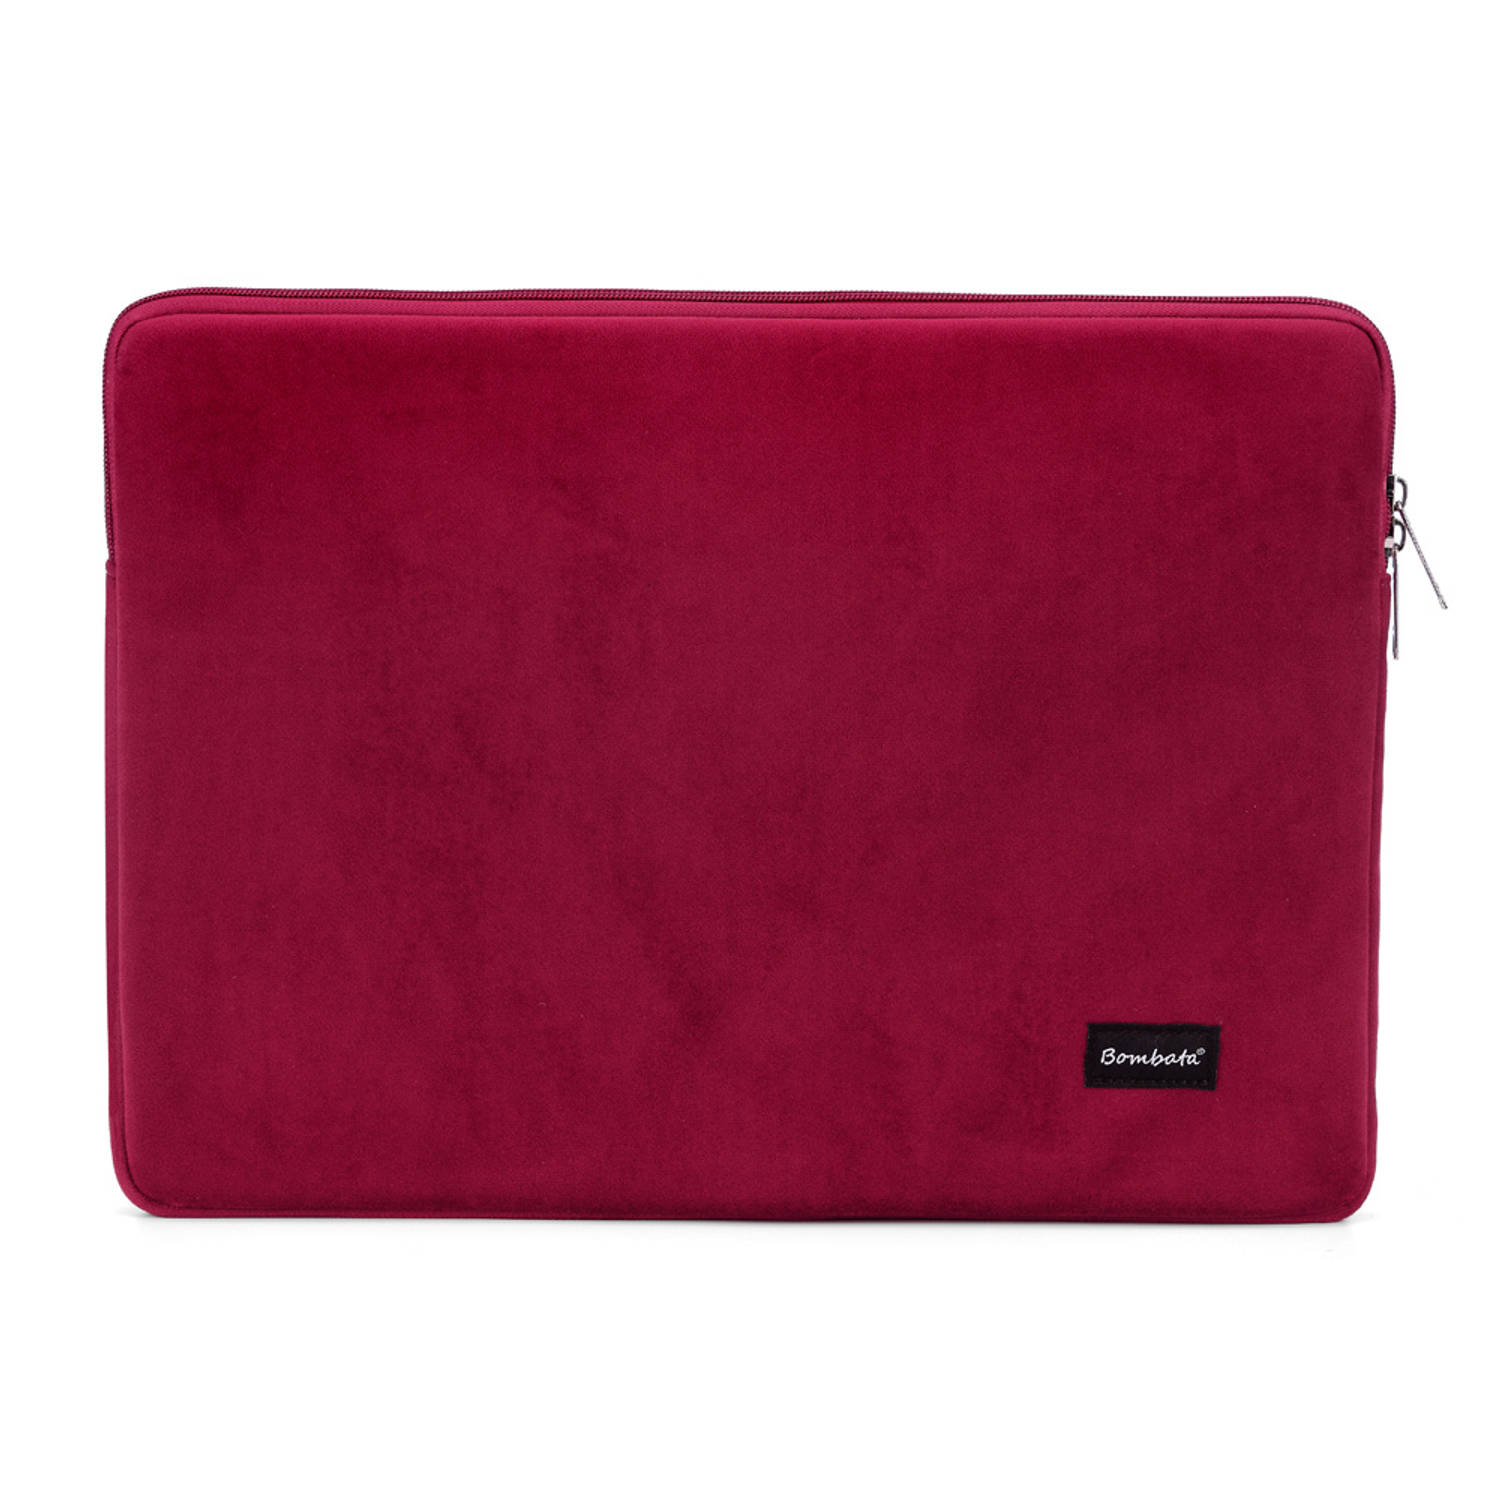 Bombata Universele Velvet Laptophoes Sleeve 15.6 inch-16 inch Bordeaux Rood